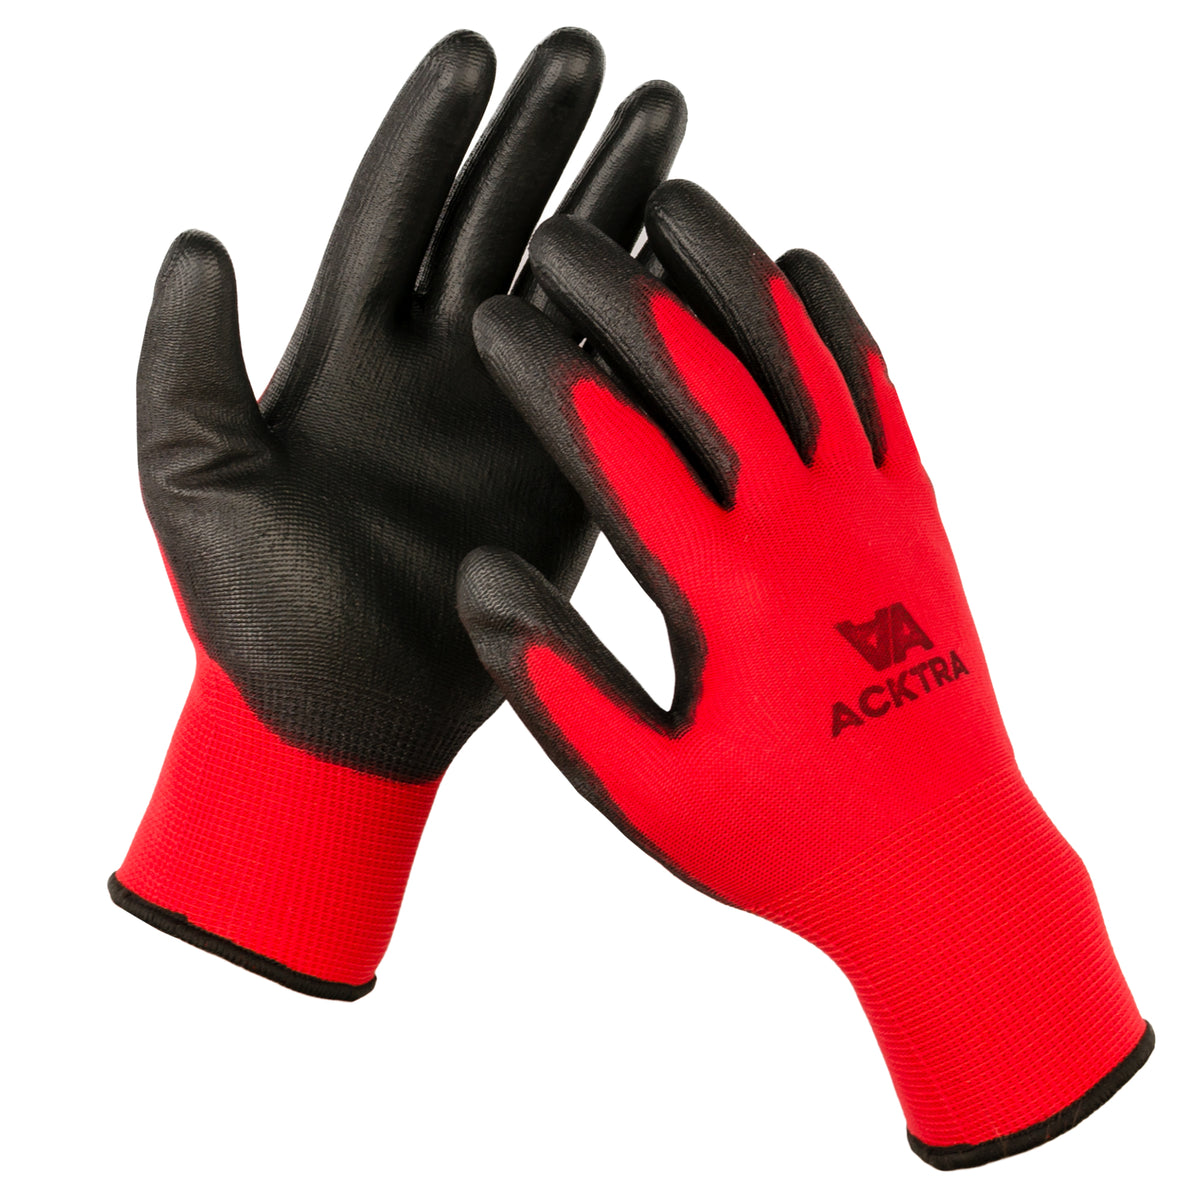 P‑Grip Ultra Thin Black Nylon/Polyurethane Gloves with Black PU Coating